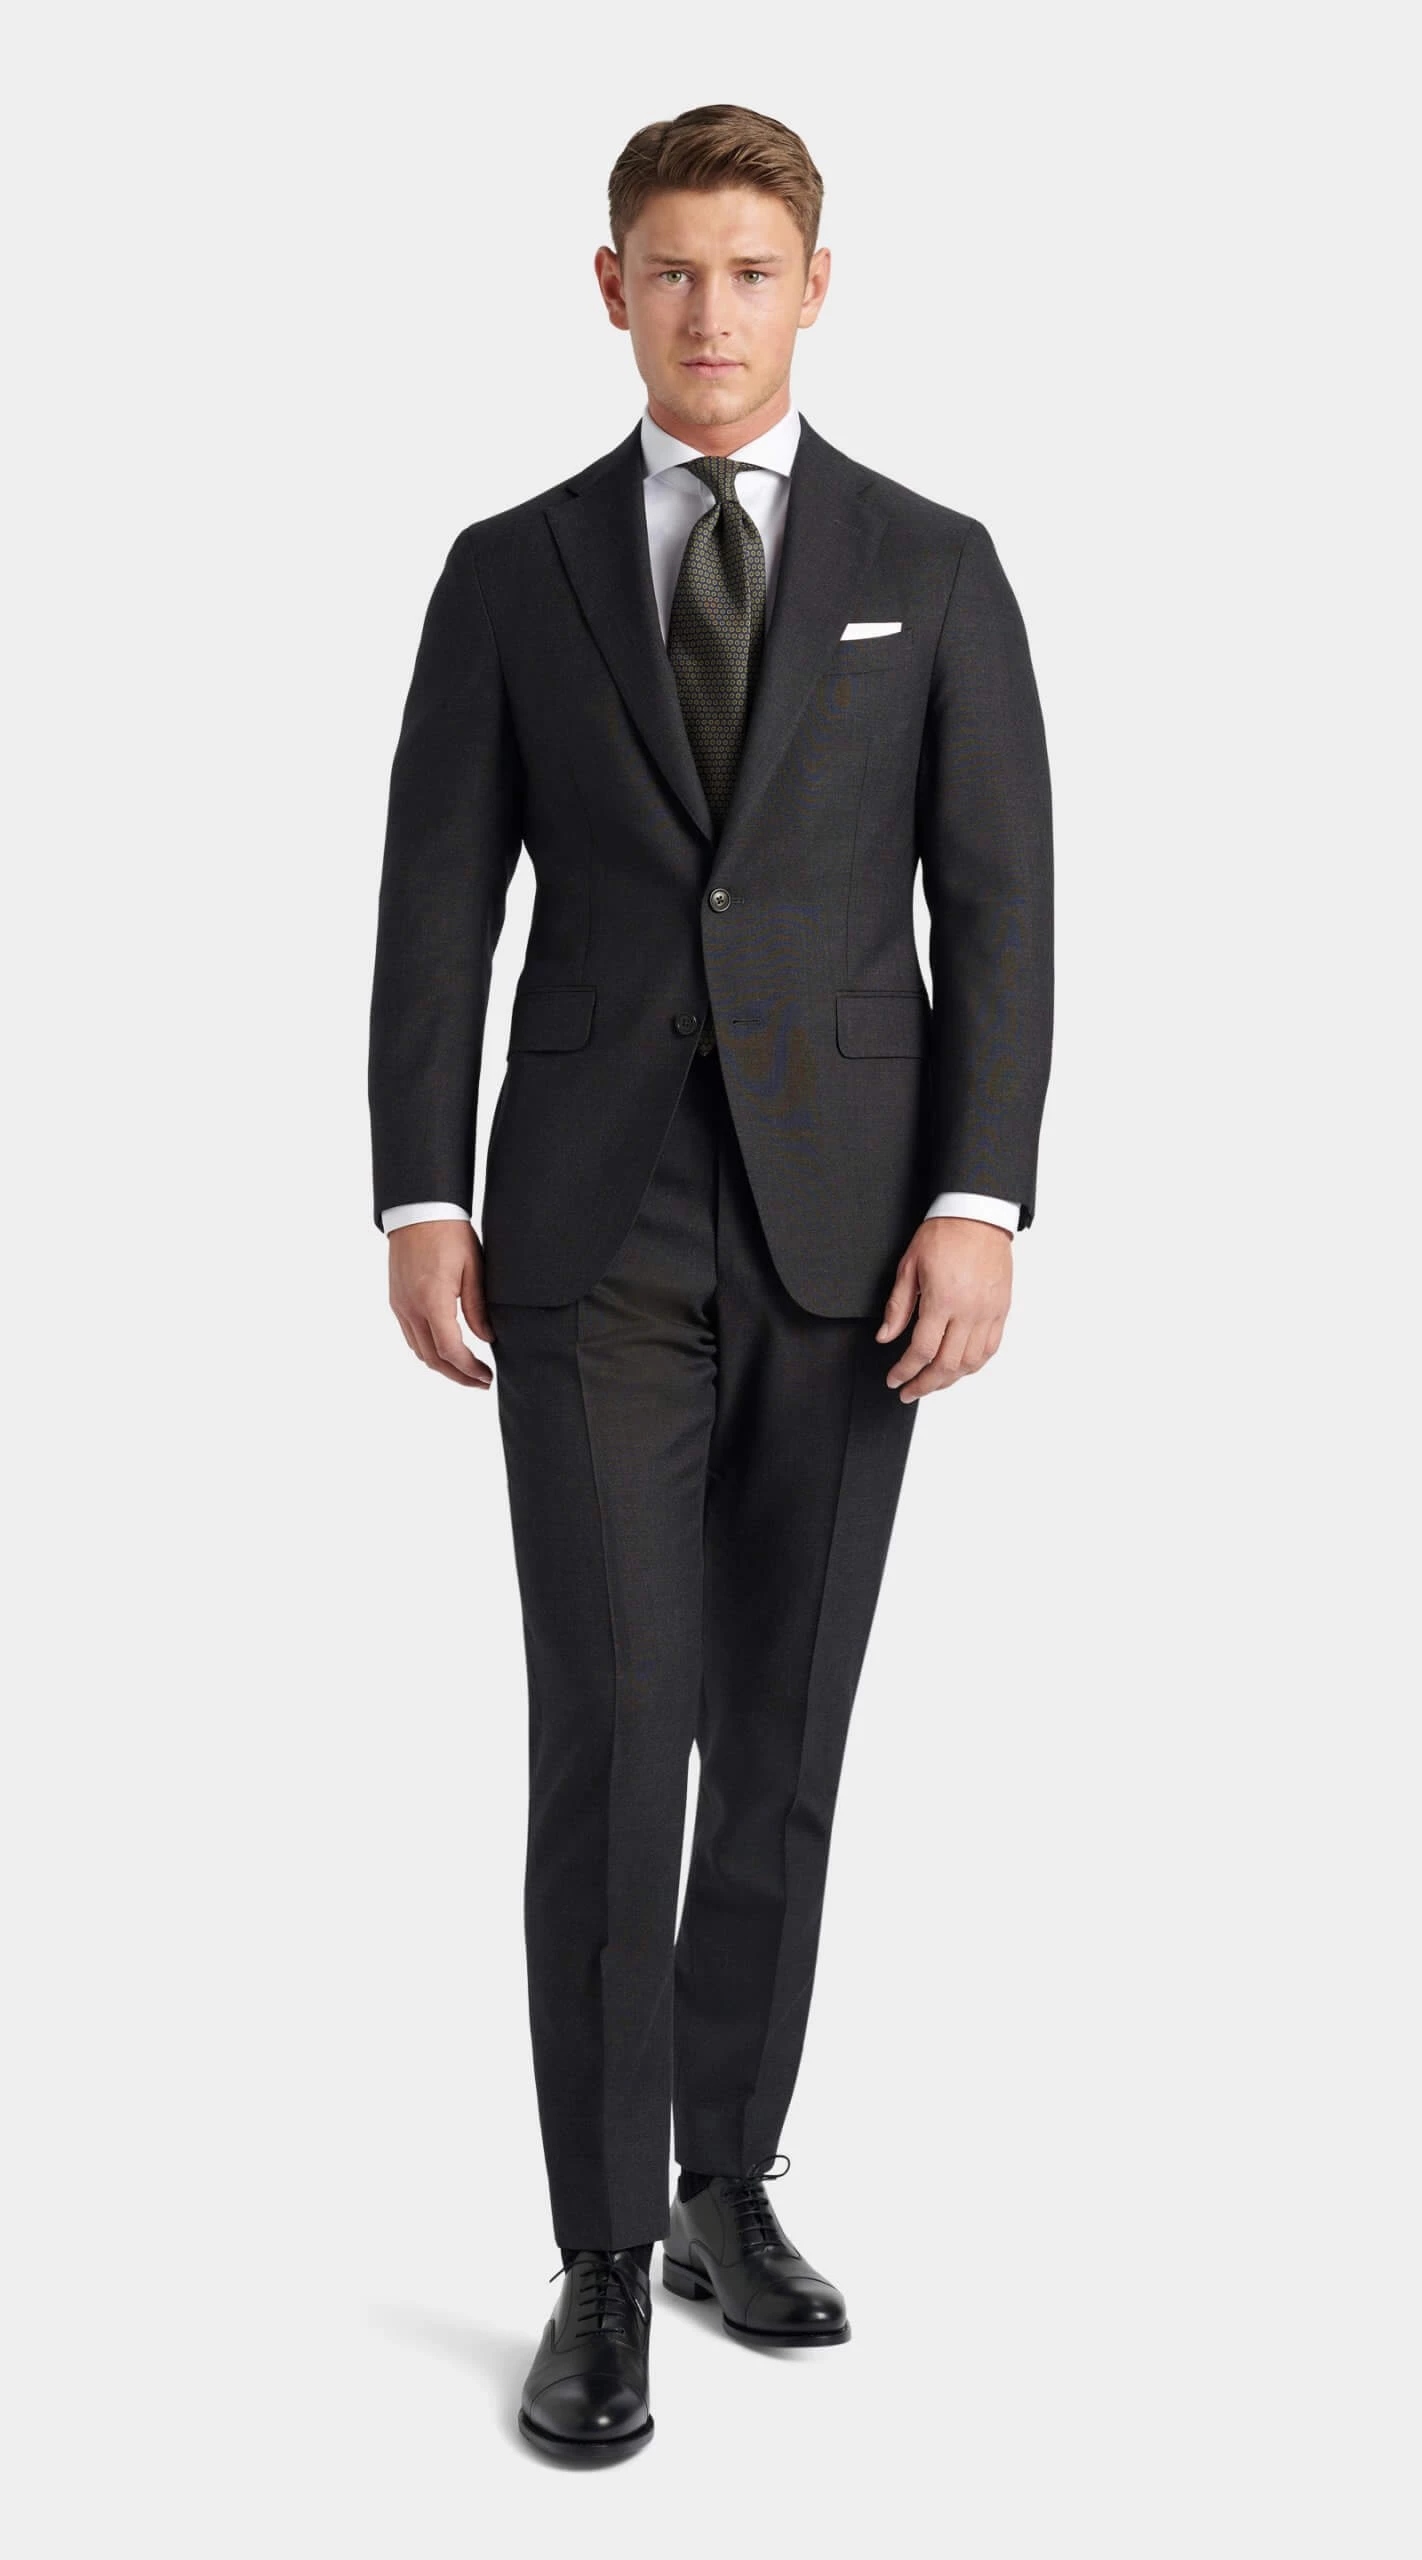 Charcoal Gray Suit / Charcoal gråt jakkesæt / Anthrazitfarbener Anzug / Kullgrå Dress i Hopsack